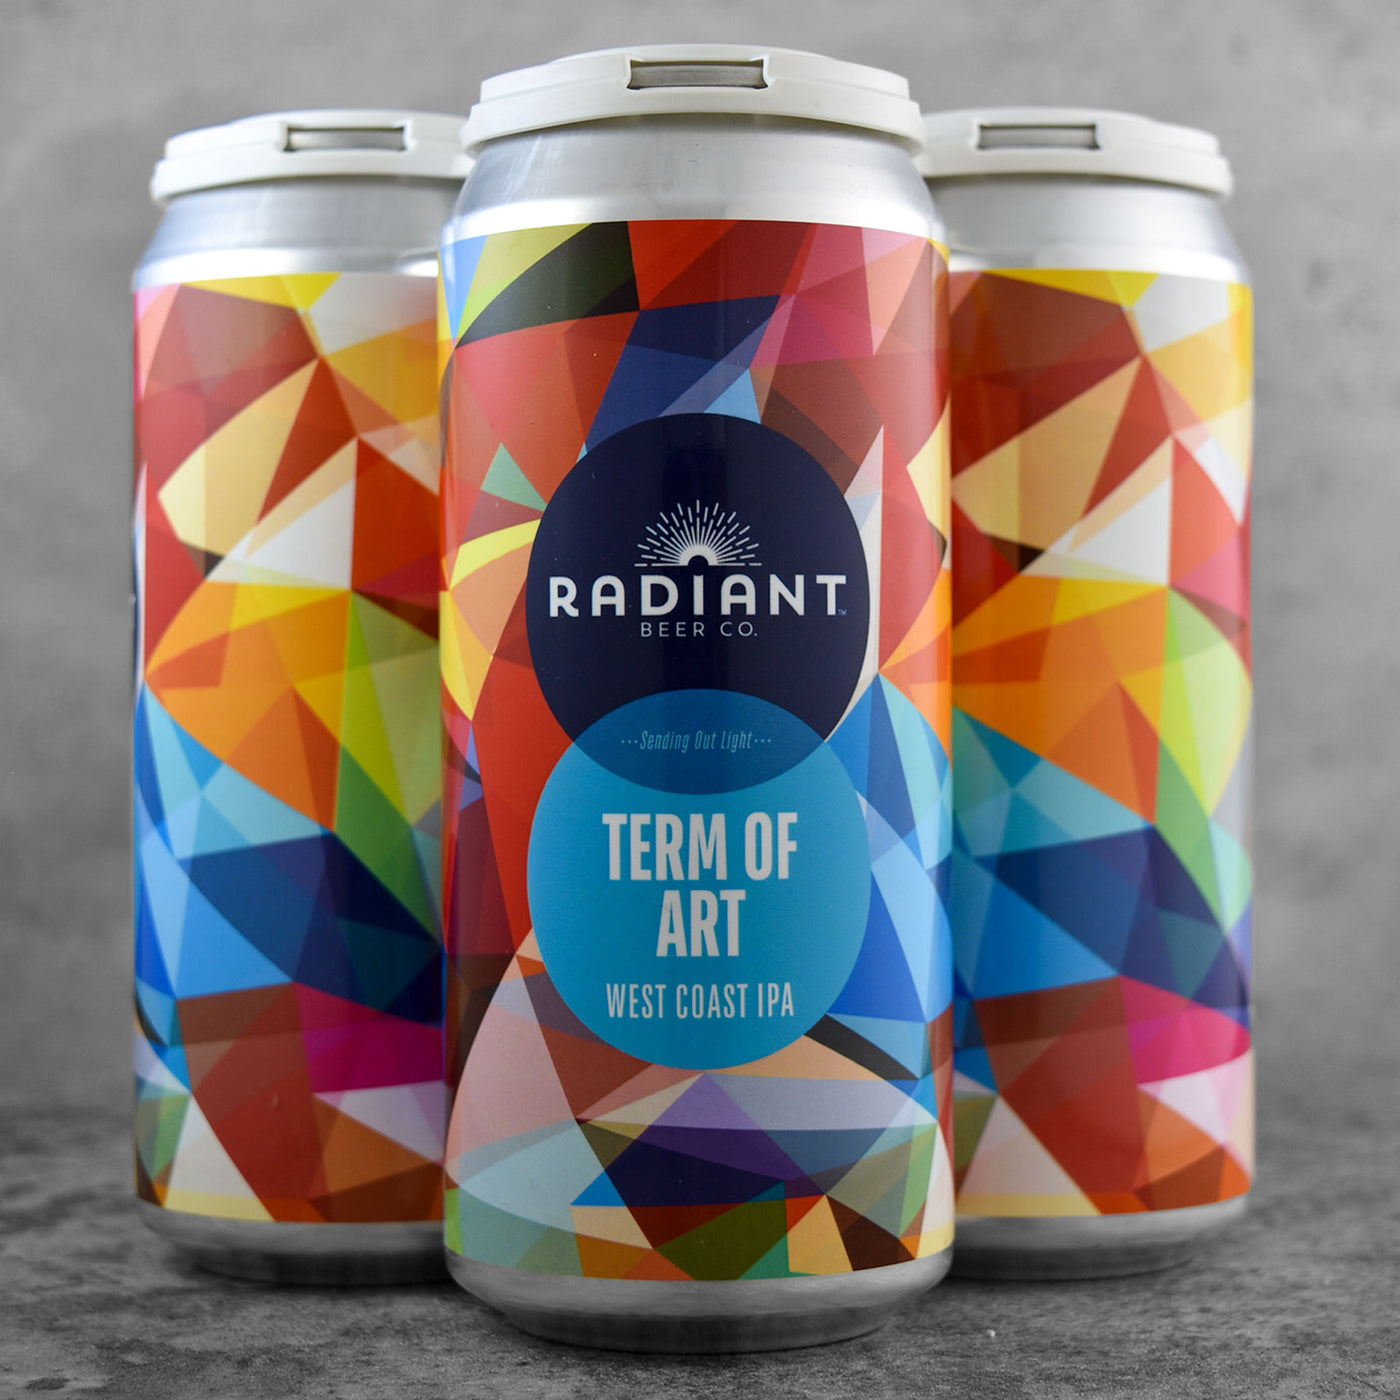 Radiant Beer Co. Term of Art